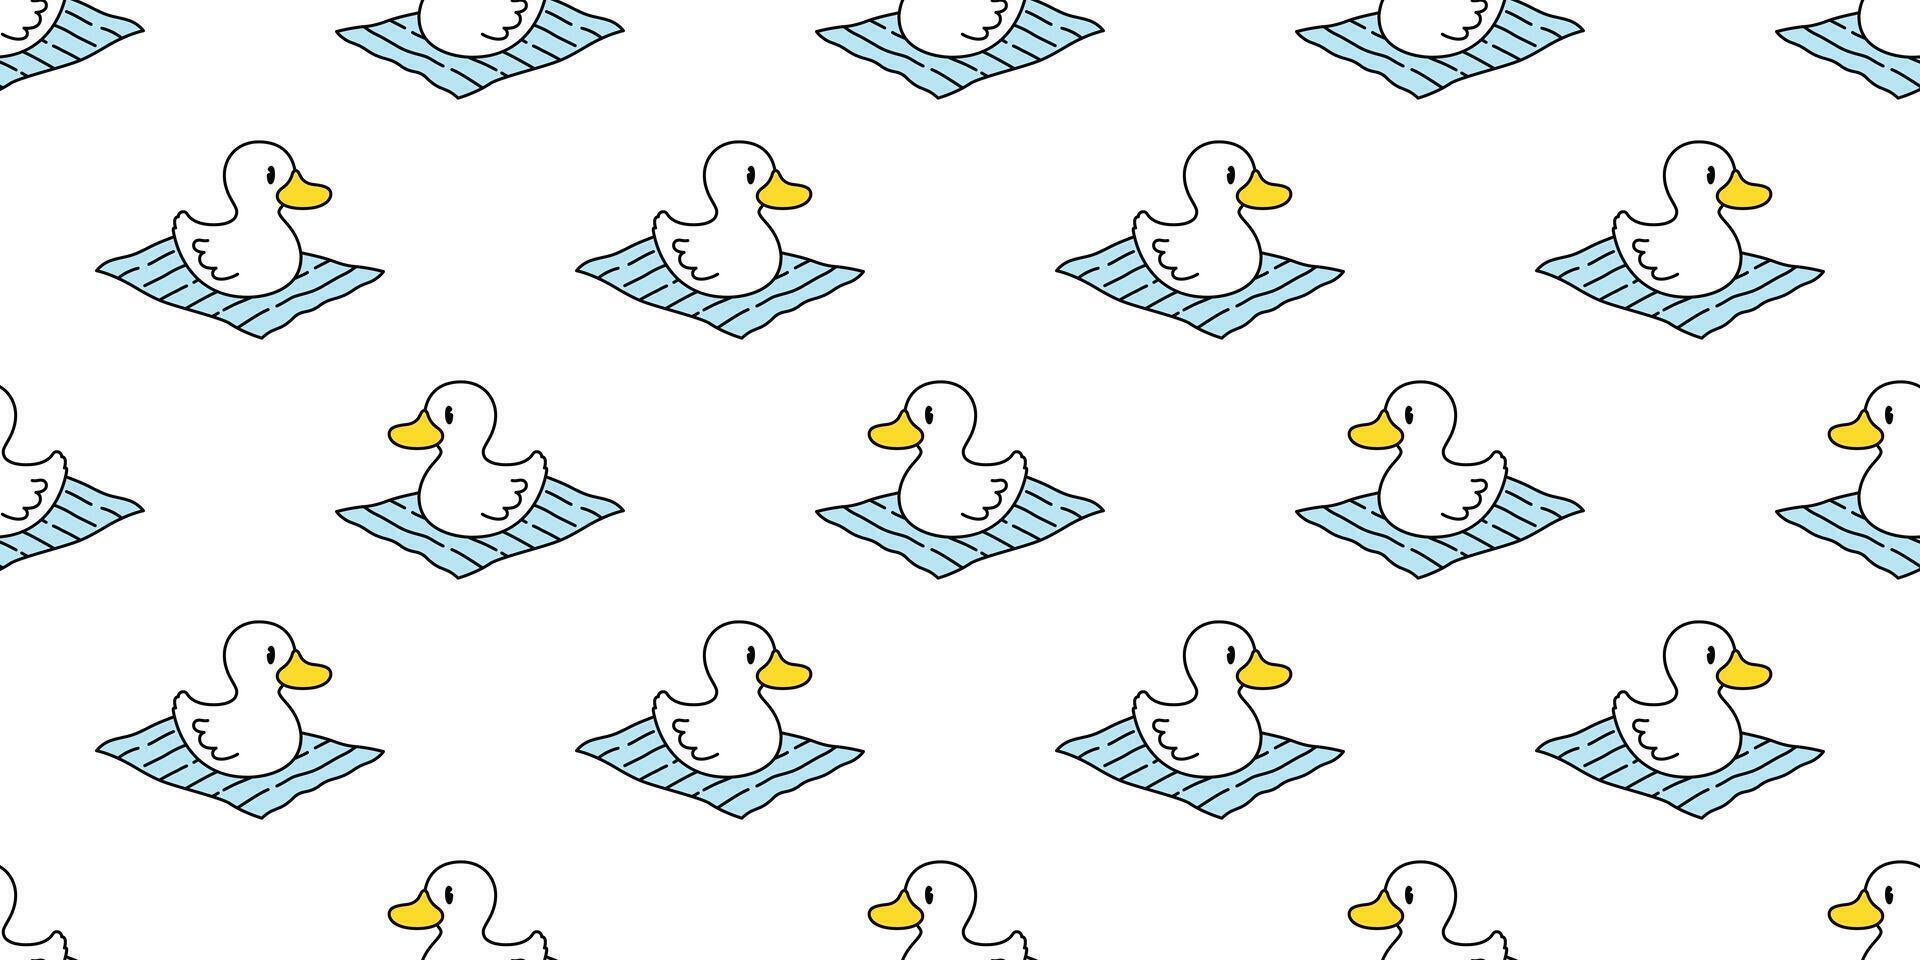 duck seamless pattern vector rubber duck bird farm beach towel cartoon scarf isolated repeat wallpaper tile background illustration animal doodle design